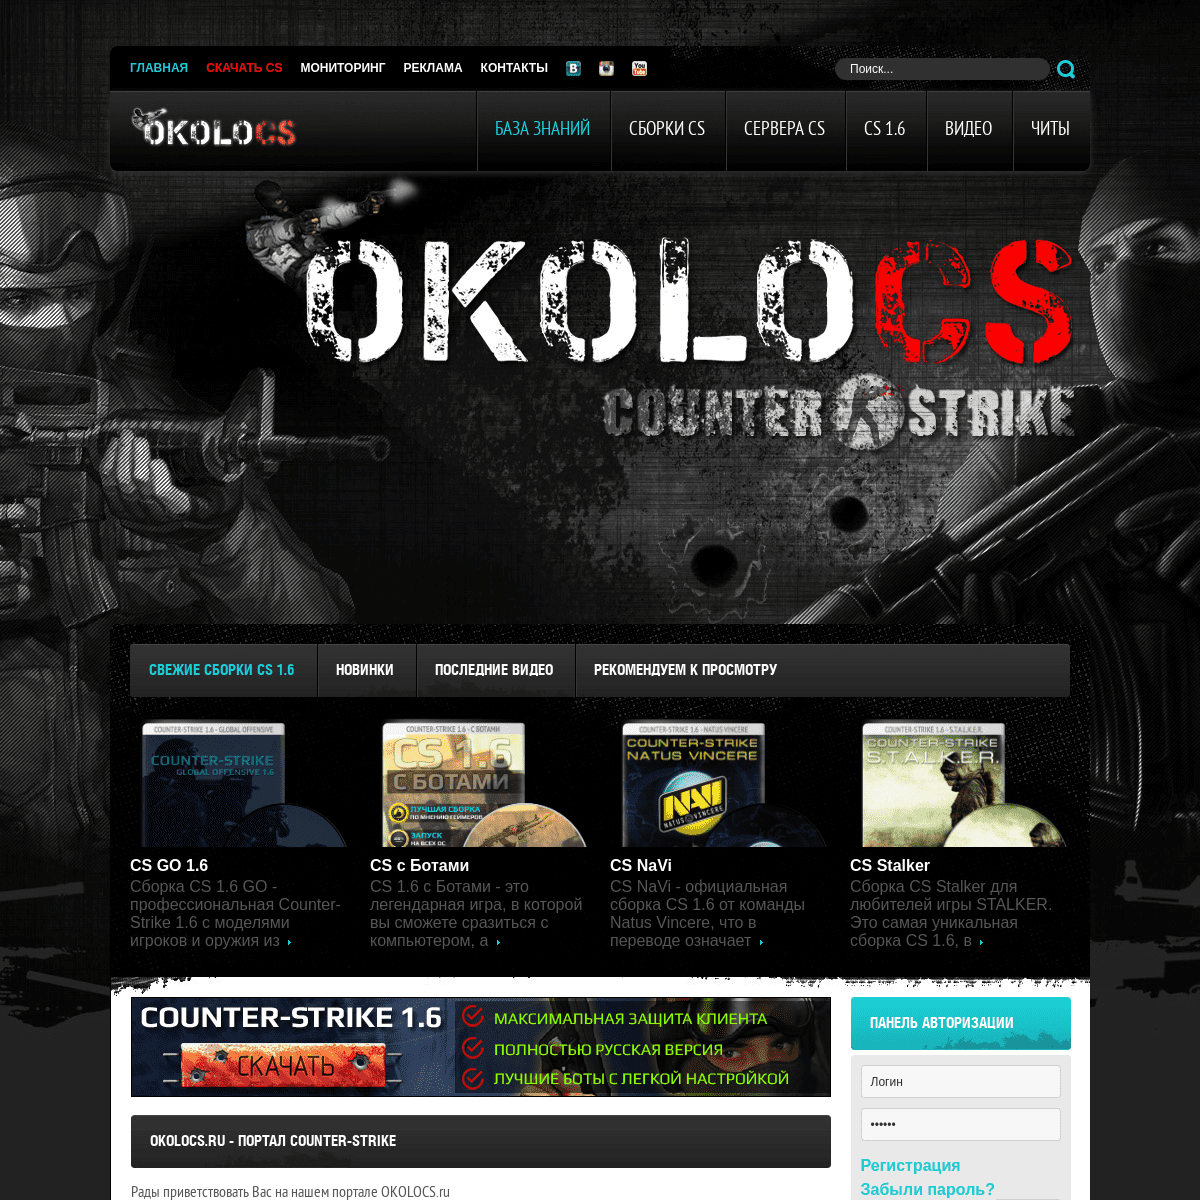 OKOLOCS.ru - Портал Counter-Strike